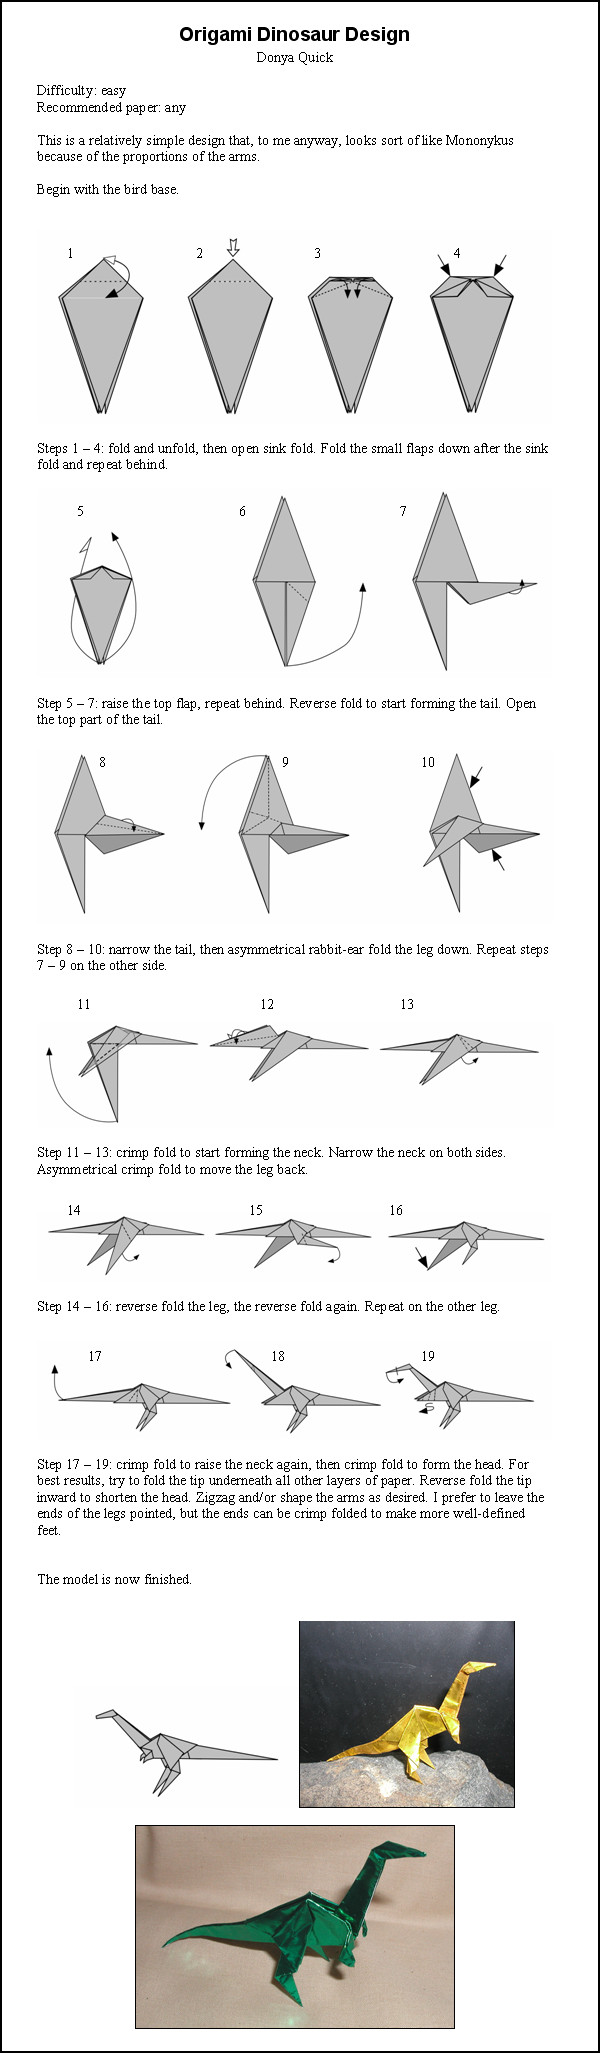 how to make a origami dinosaur